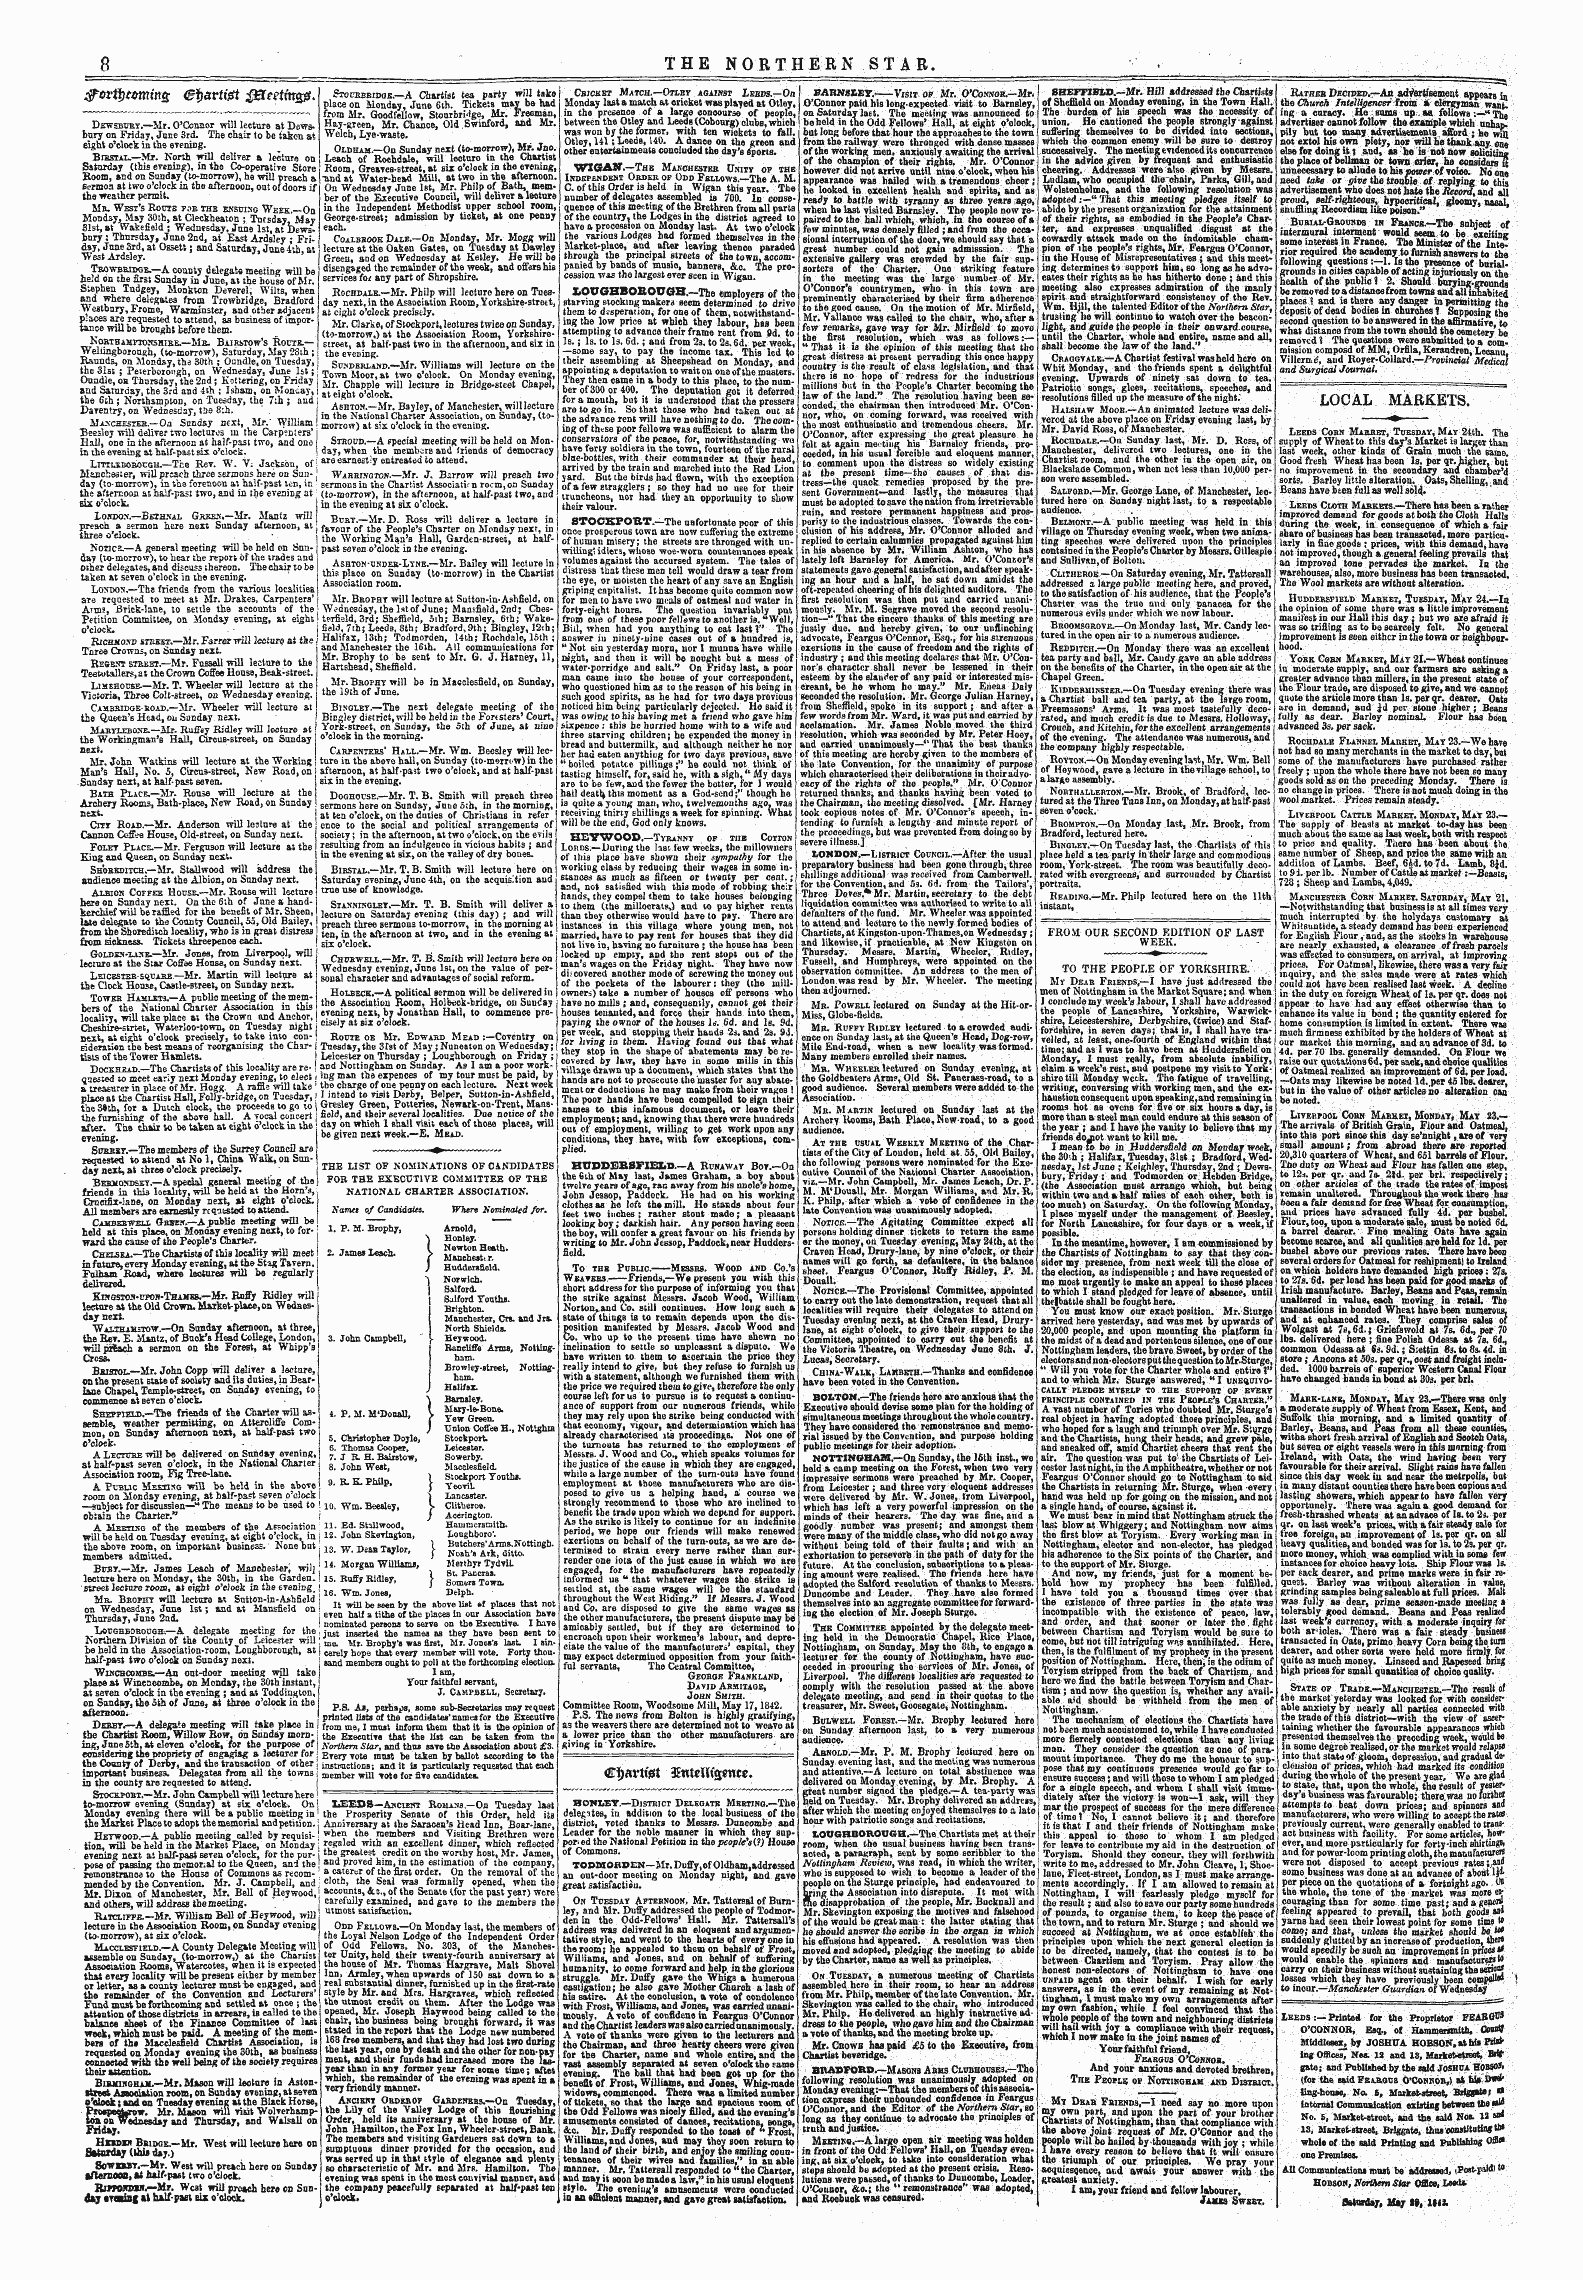 Northern Star (1837-1852): jS F Y, 5th edition: 8